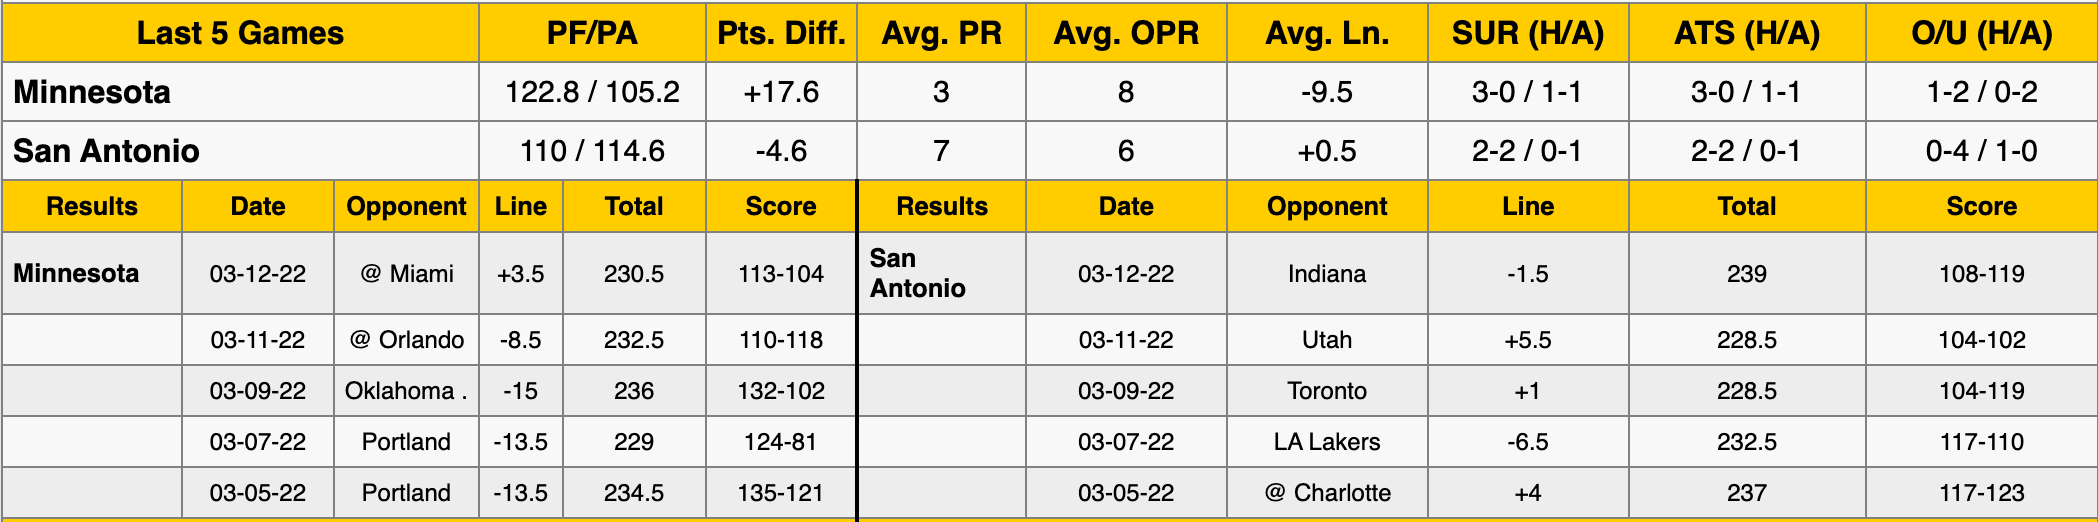 San Antonio Spurs vs Minnesota Timberwolves Data